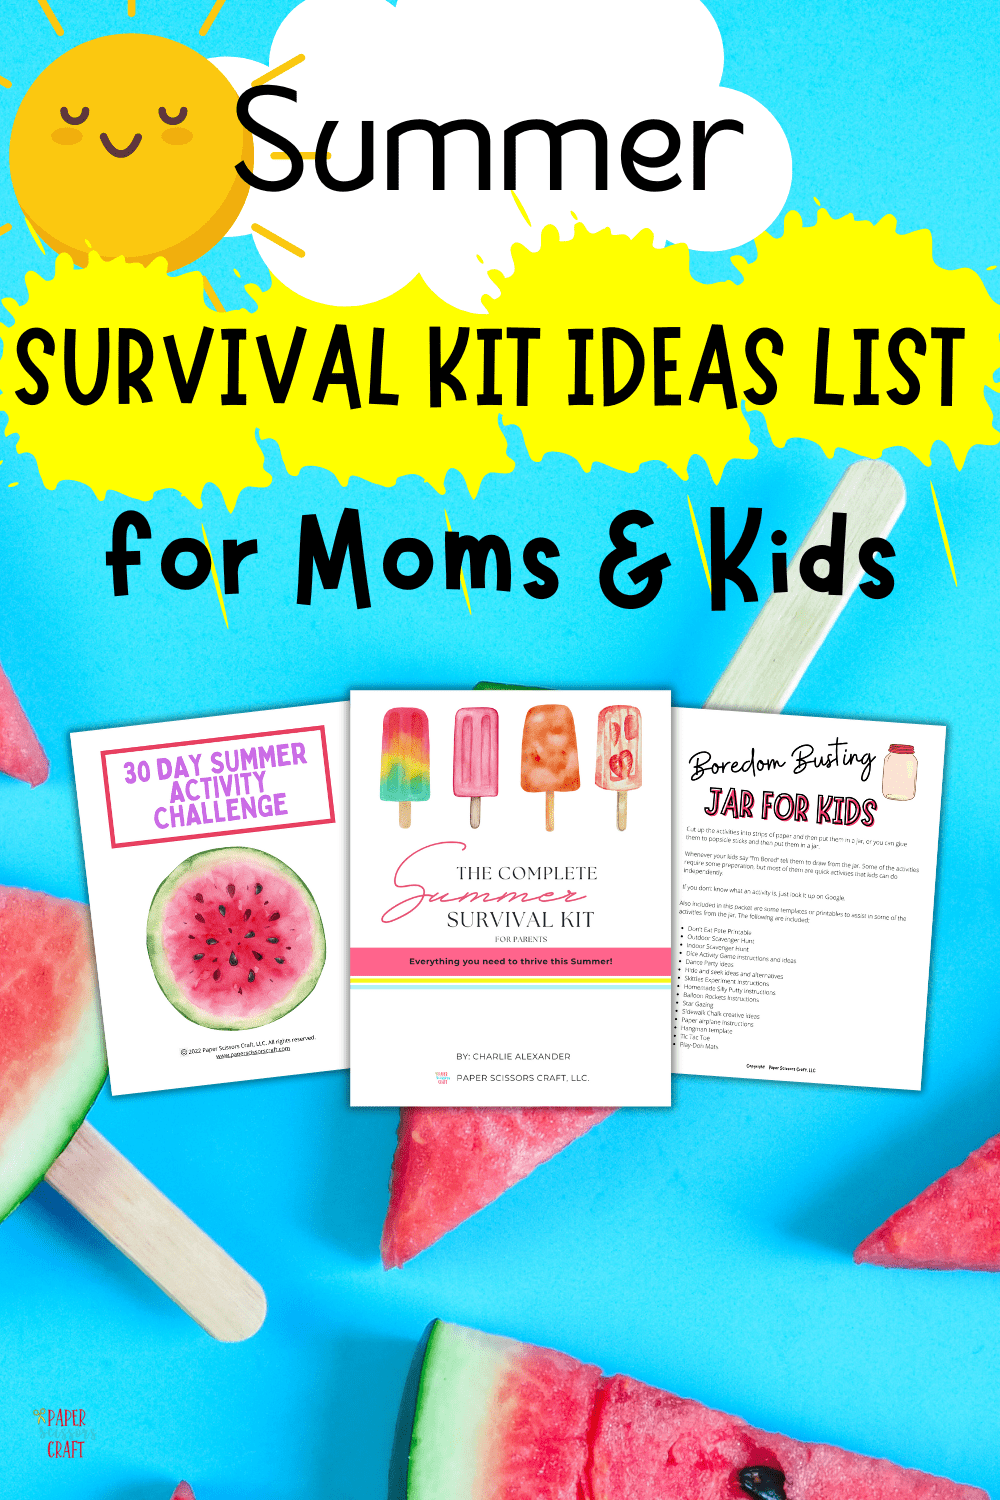 Summer survival kit ideas list for moms and kids Pinterest pin.